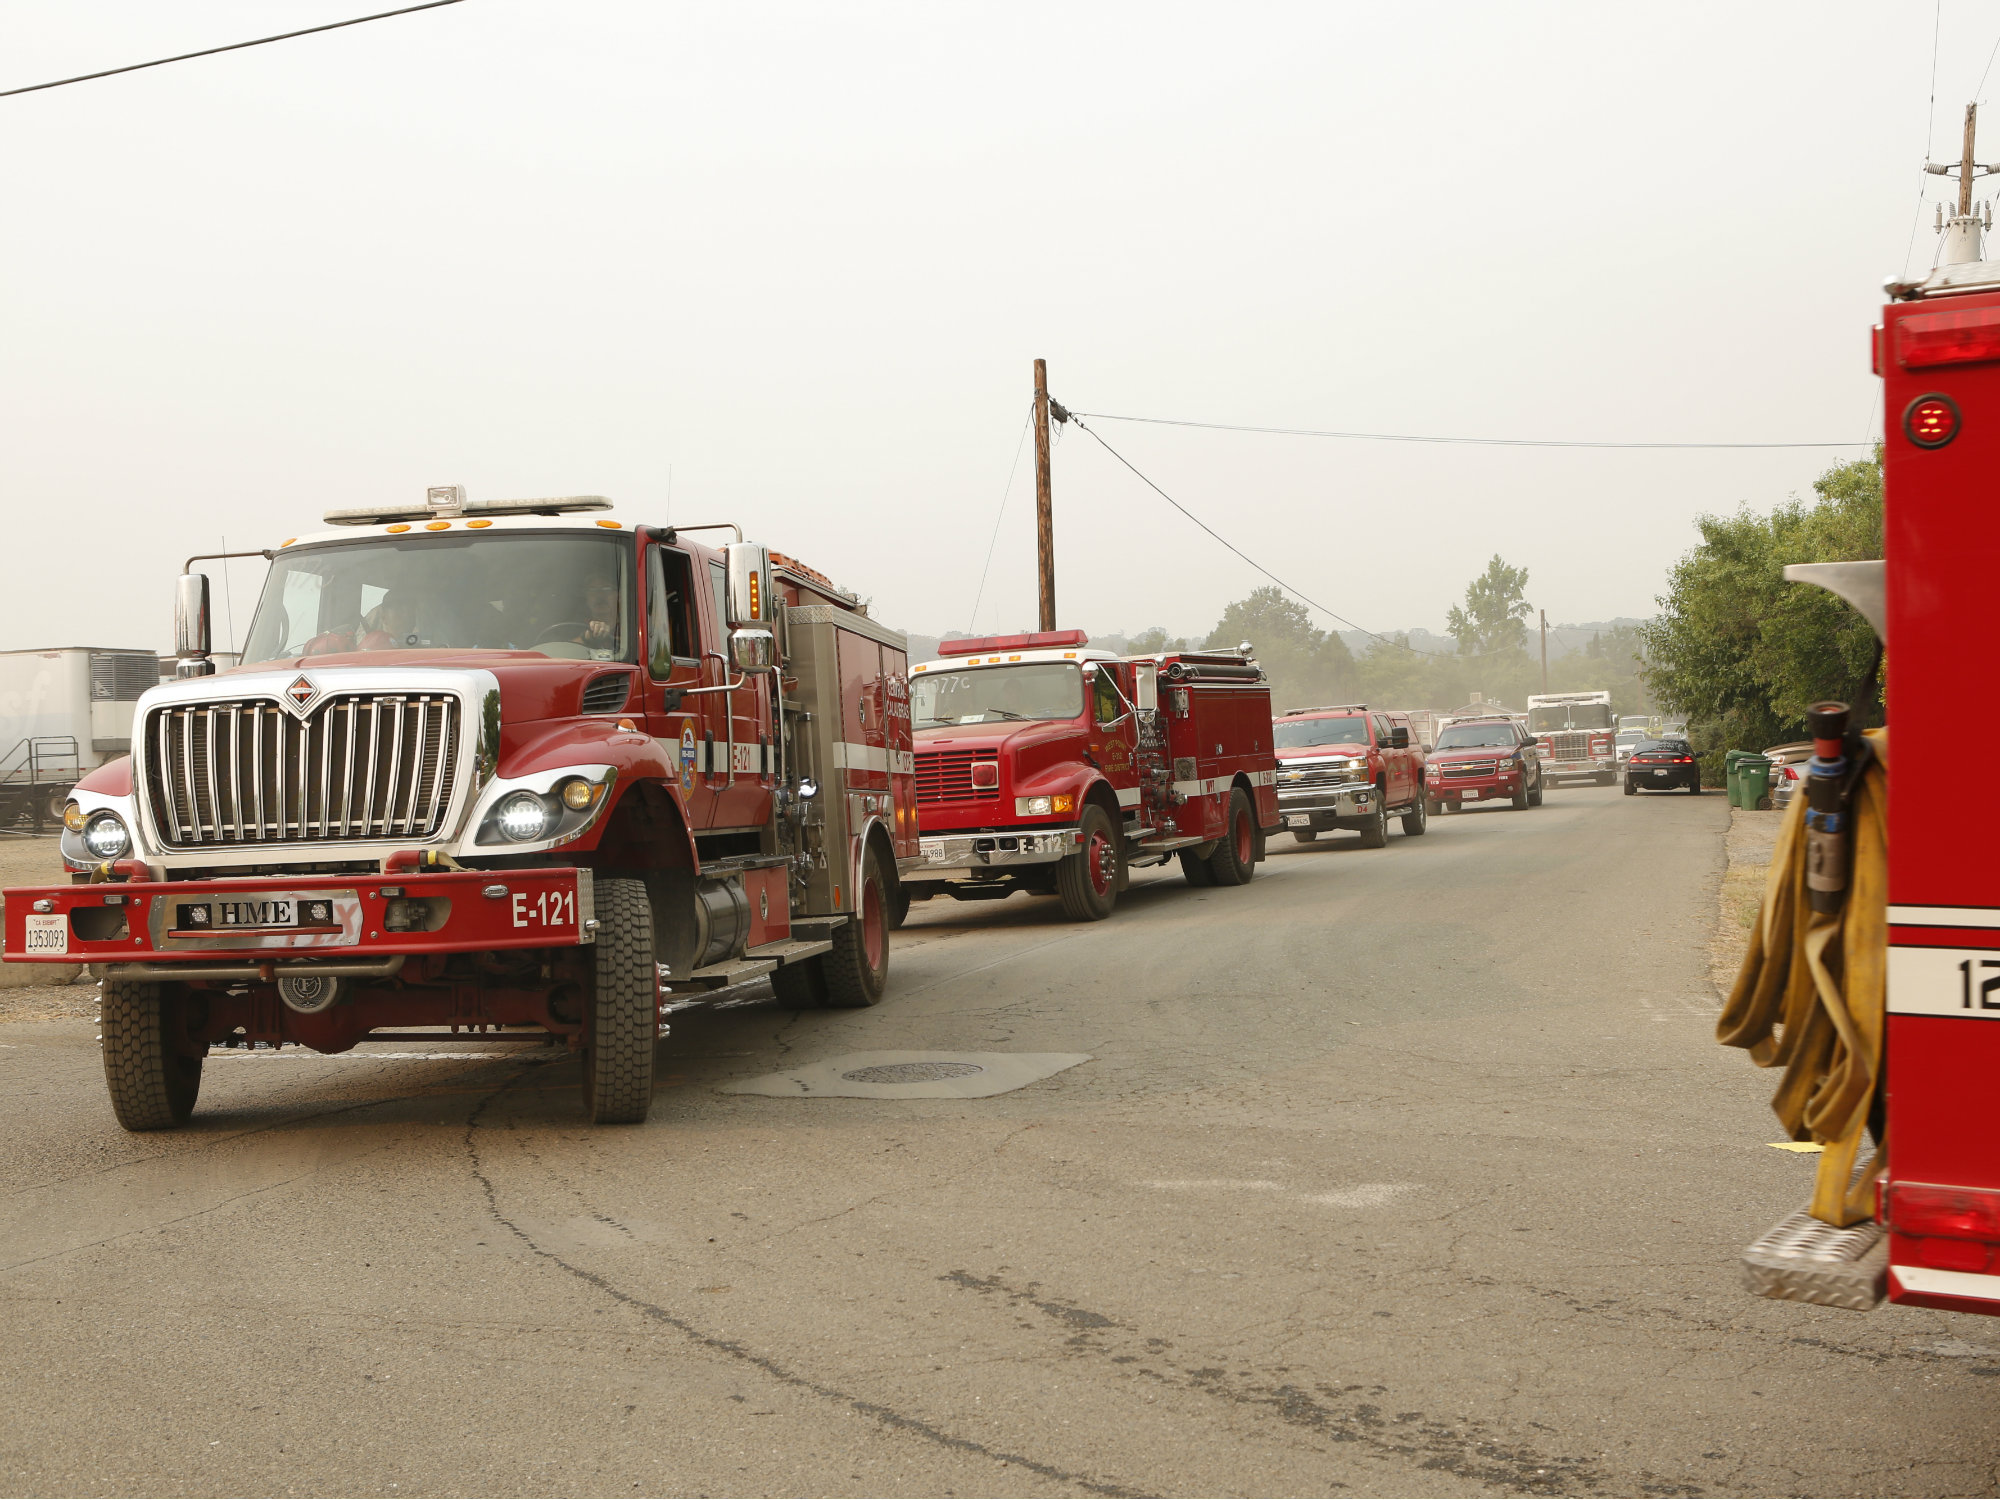 072818Carr Fire Trucks 14-BJ-p